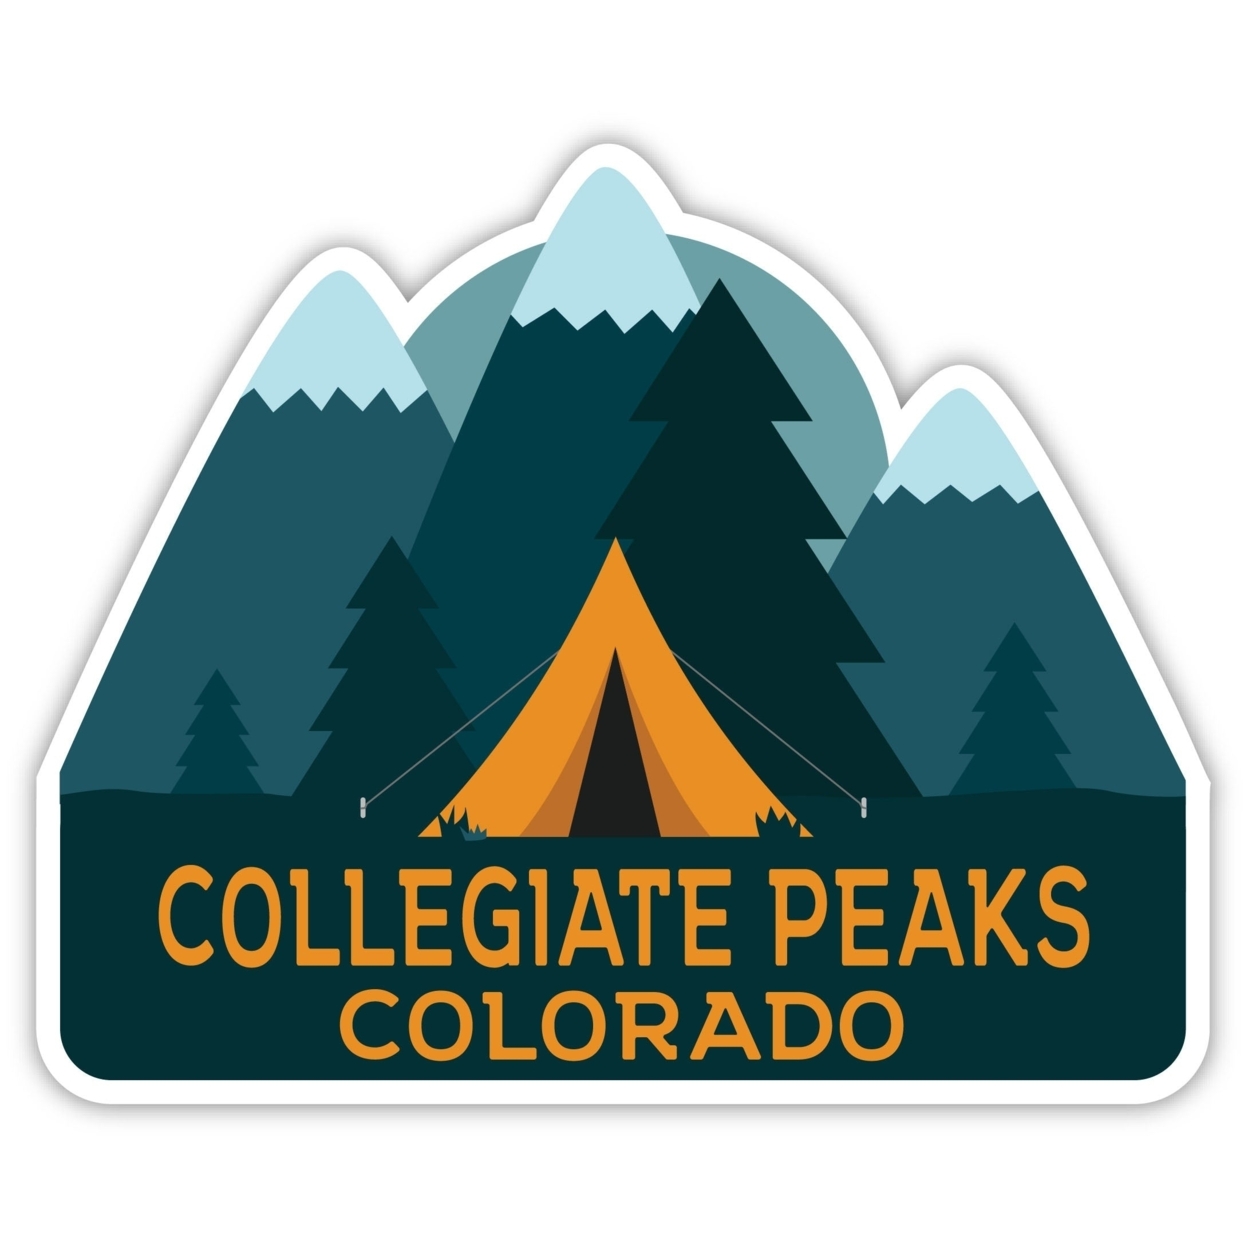 Collegiate Peaks Colorado Souvenir Decorative Stickers (Choose Theme And Size) - 4-Pack, 10-Inch, Tent